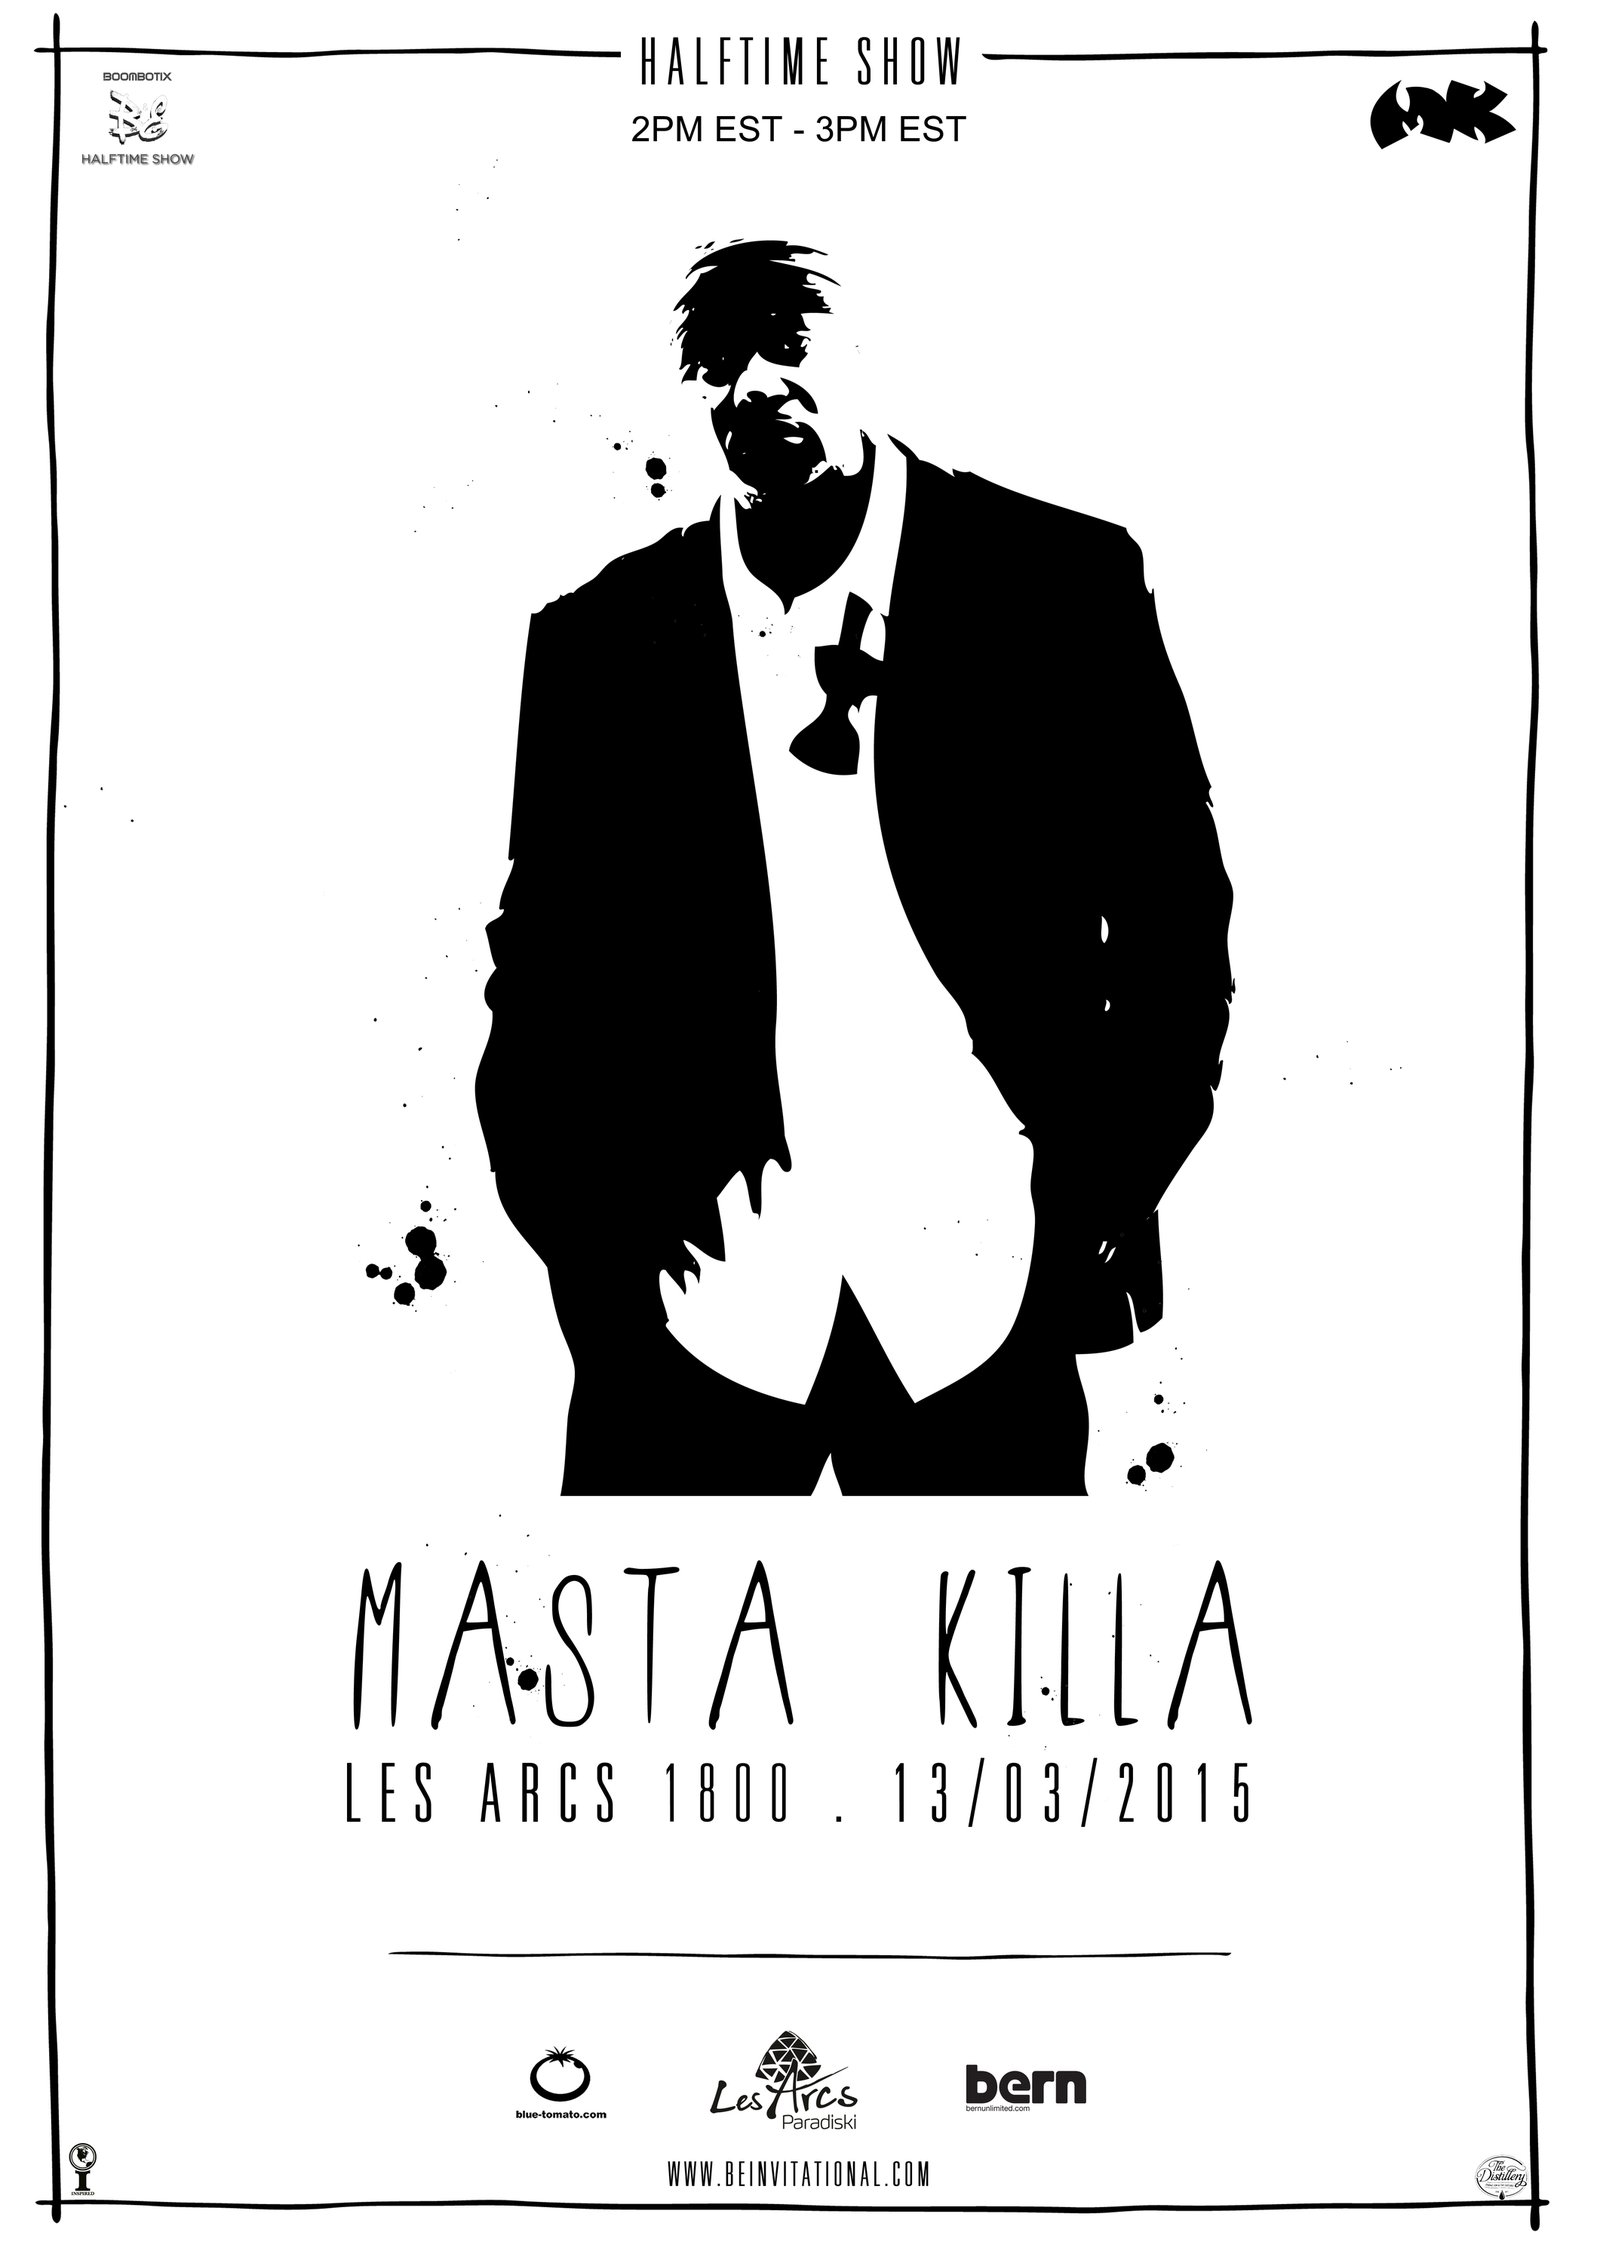 B&E Invitational BOOMBOTIX Halftime Show featuring Masta Killa 